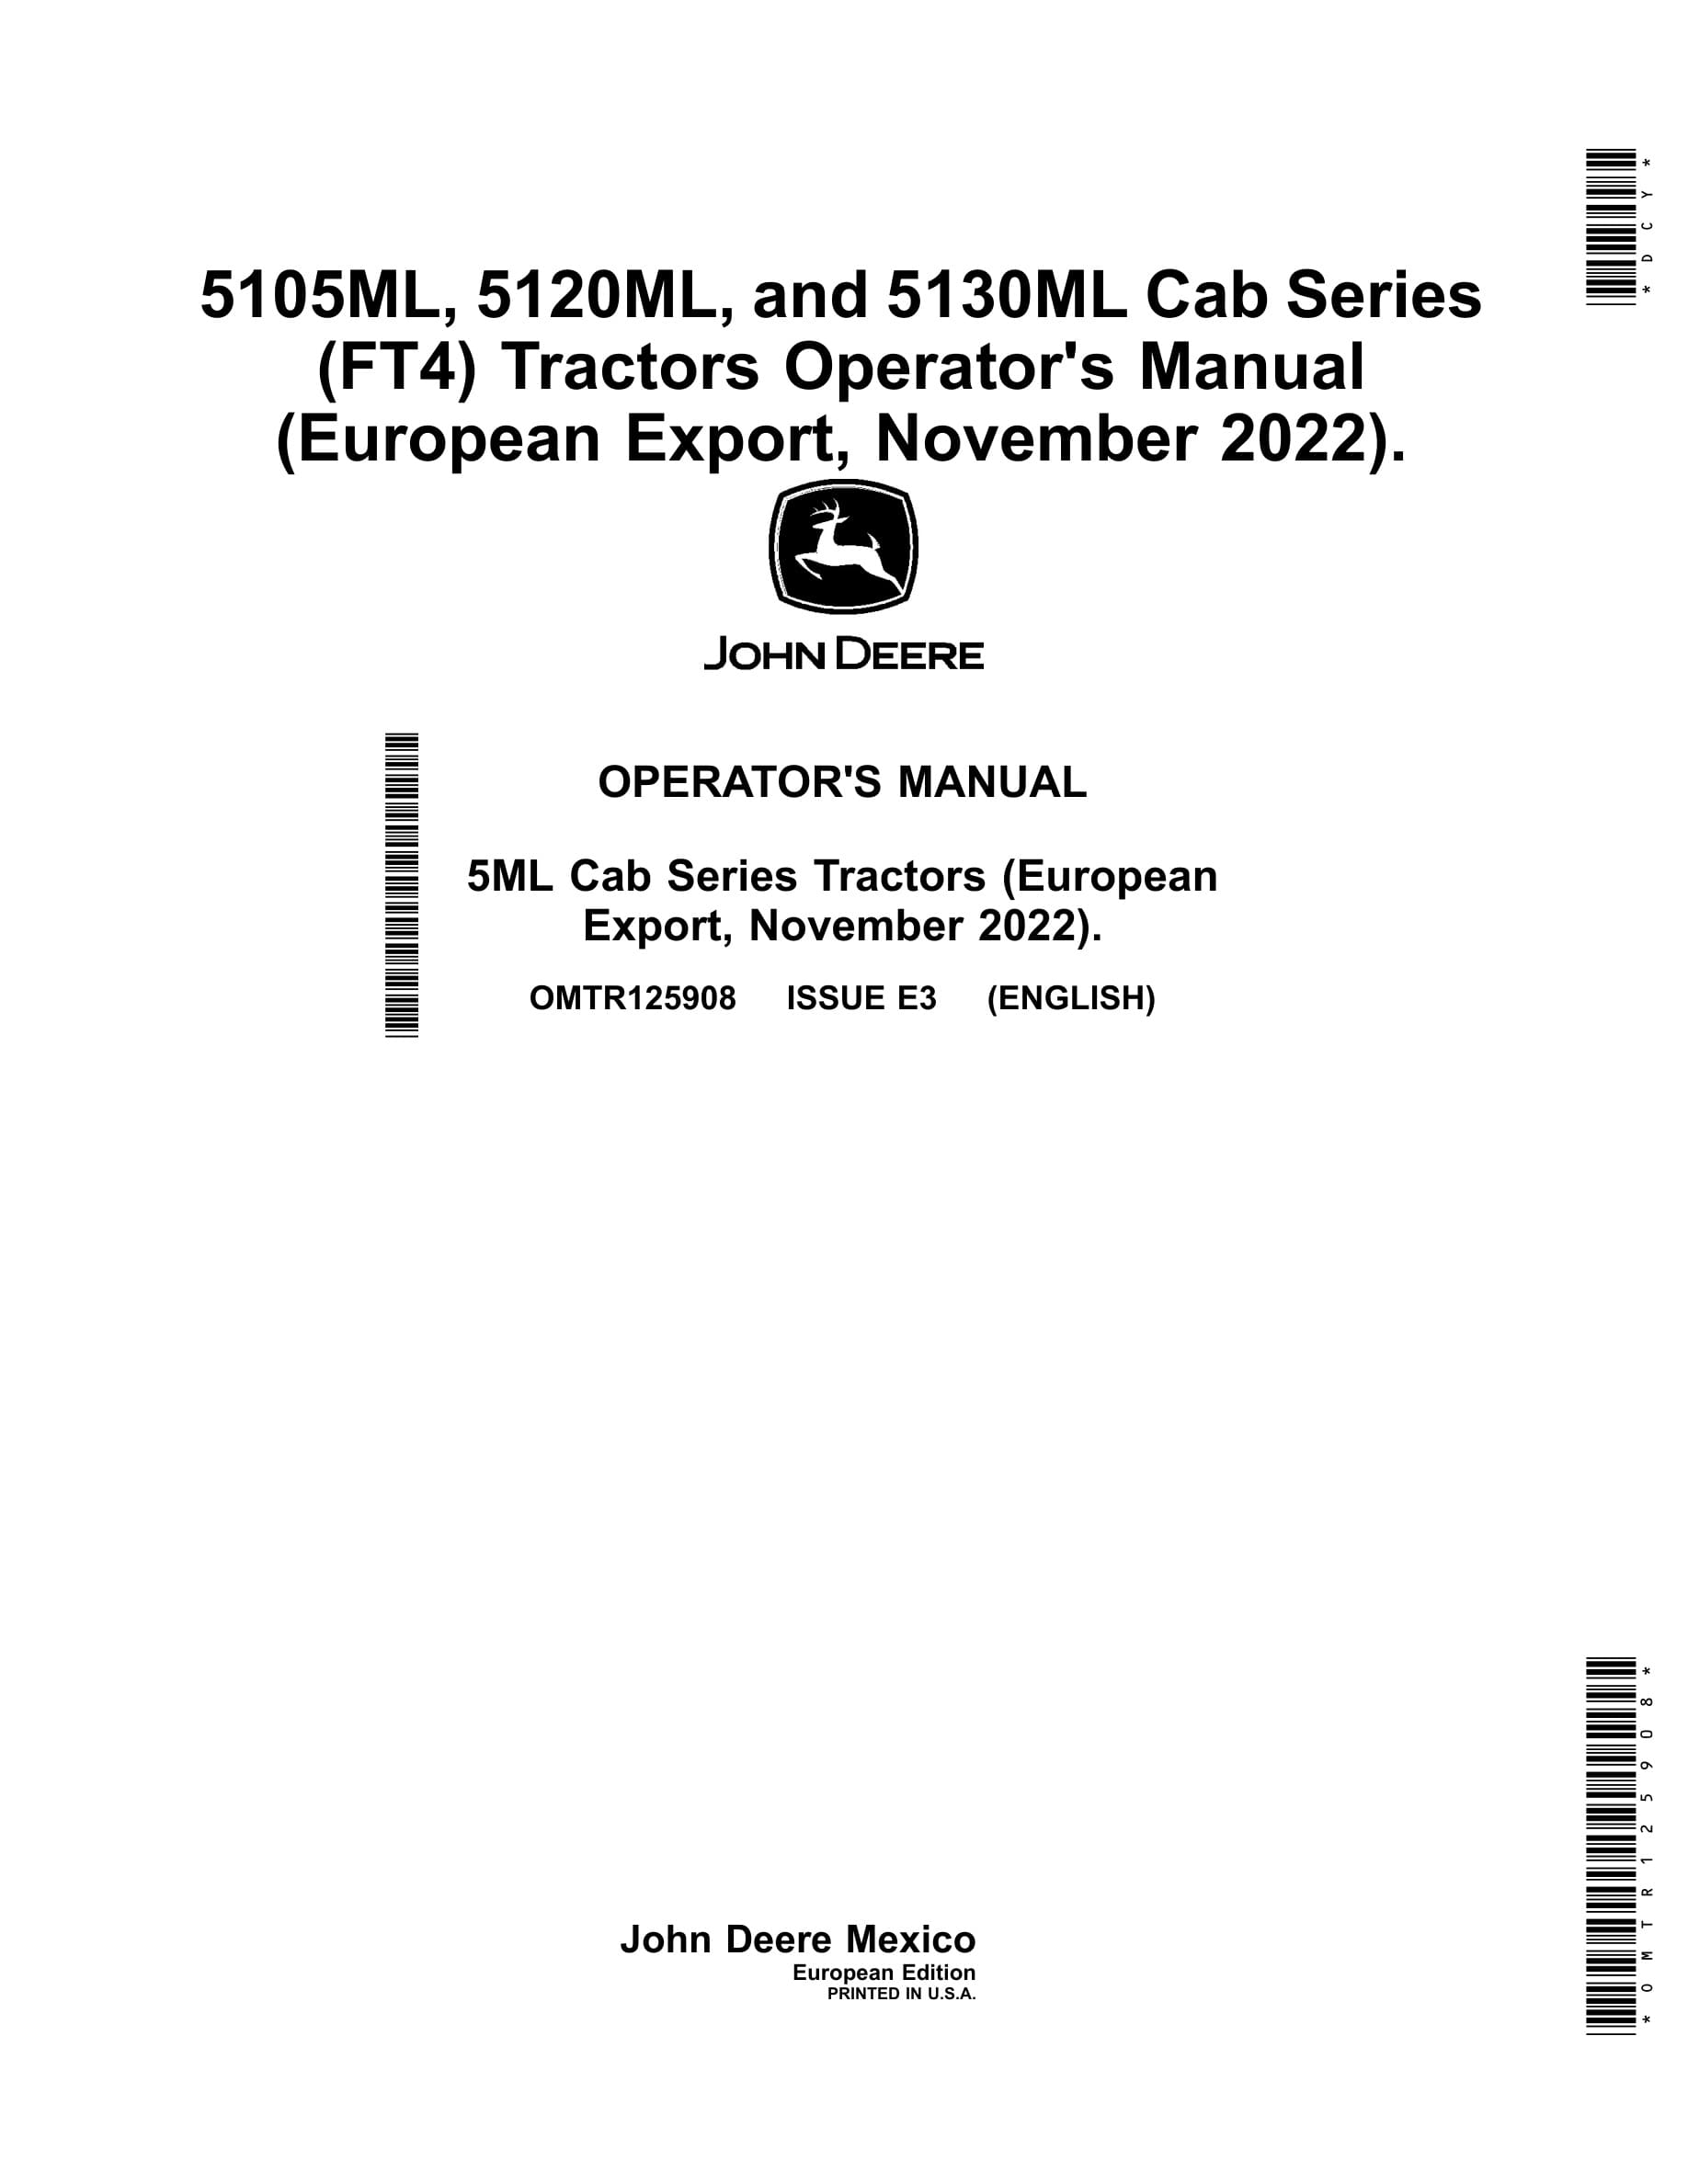 John Deere 5ml Cab Series Tractors Operator Manuals OMTR125908-1